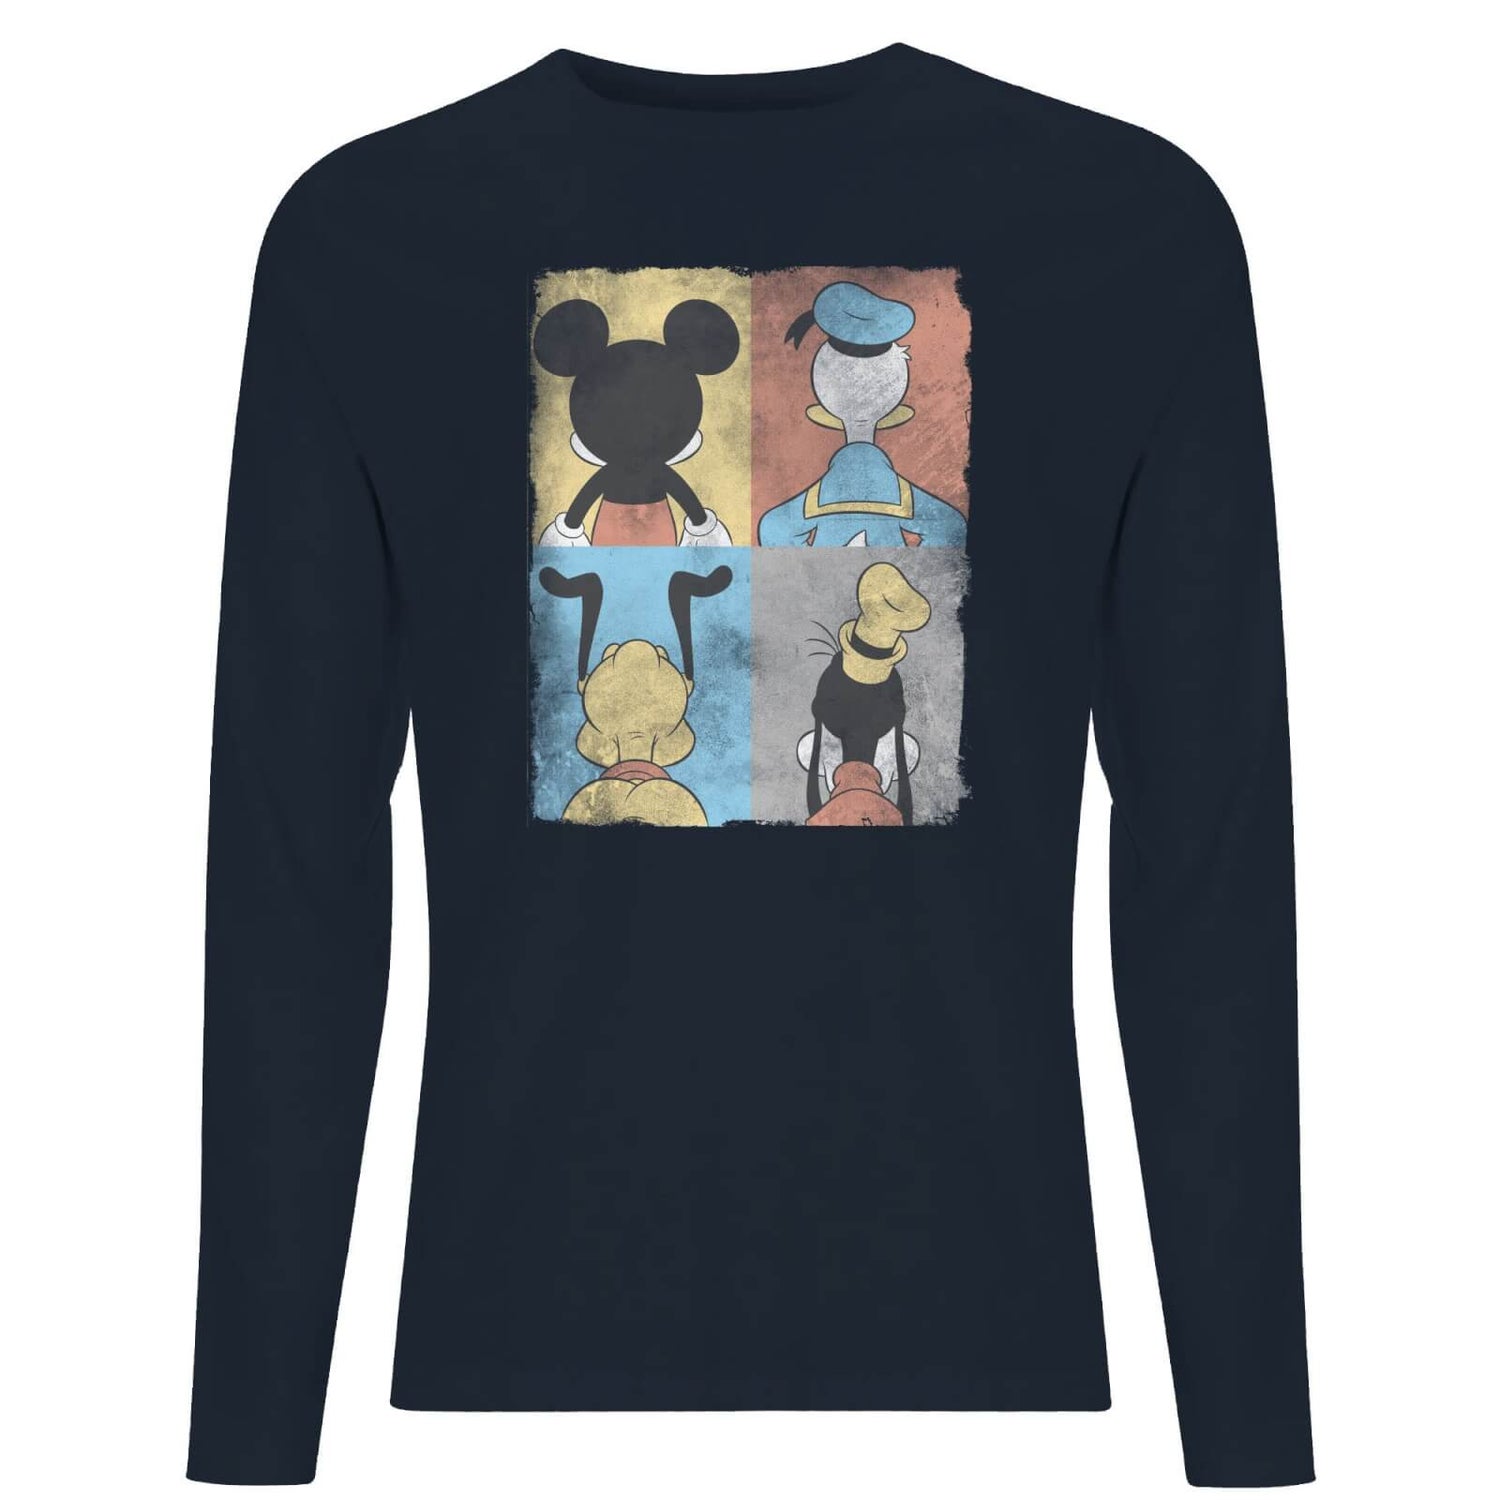 Camiseta de manga larga Pluto Goofy Tiles para hombre del Pato Donald - Azul marino